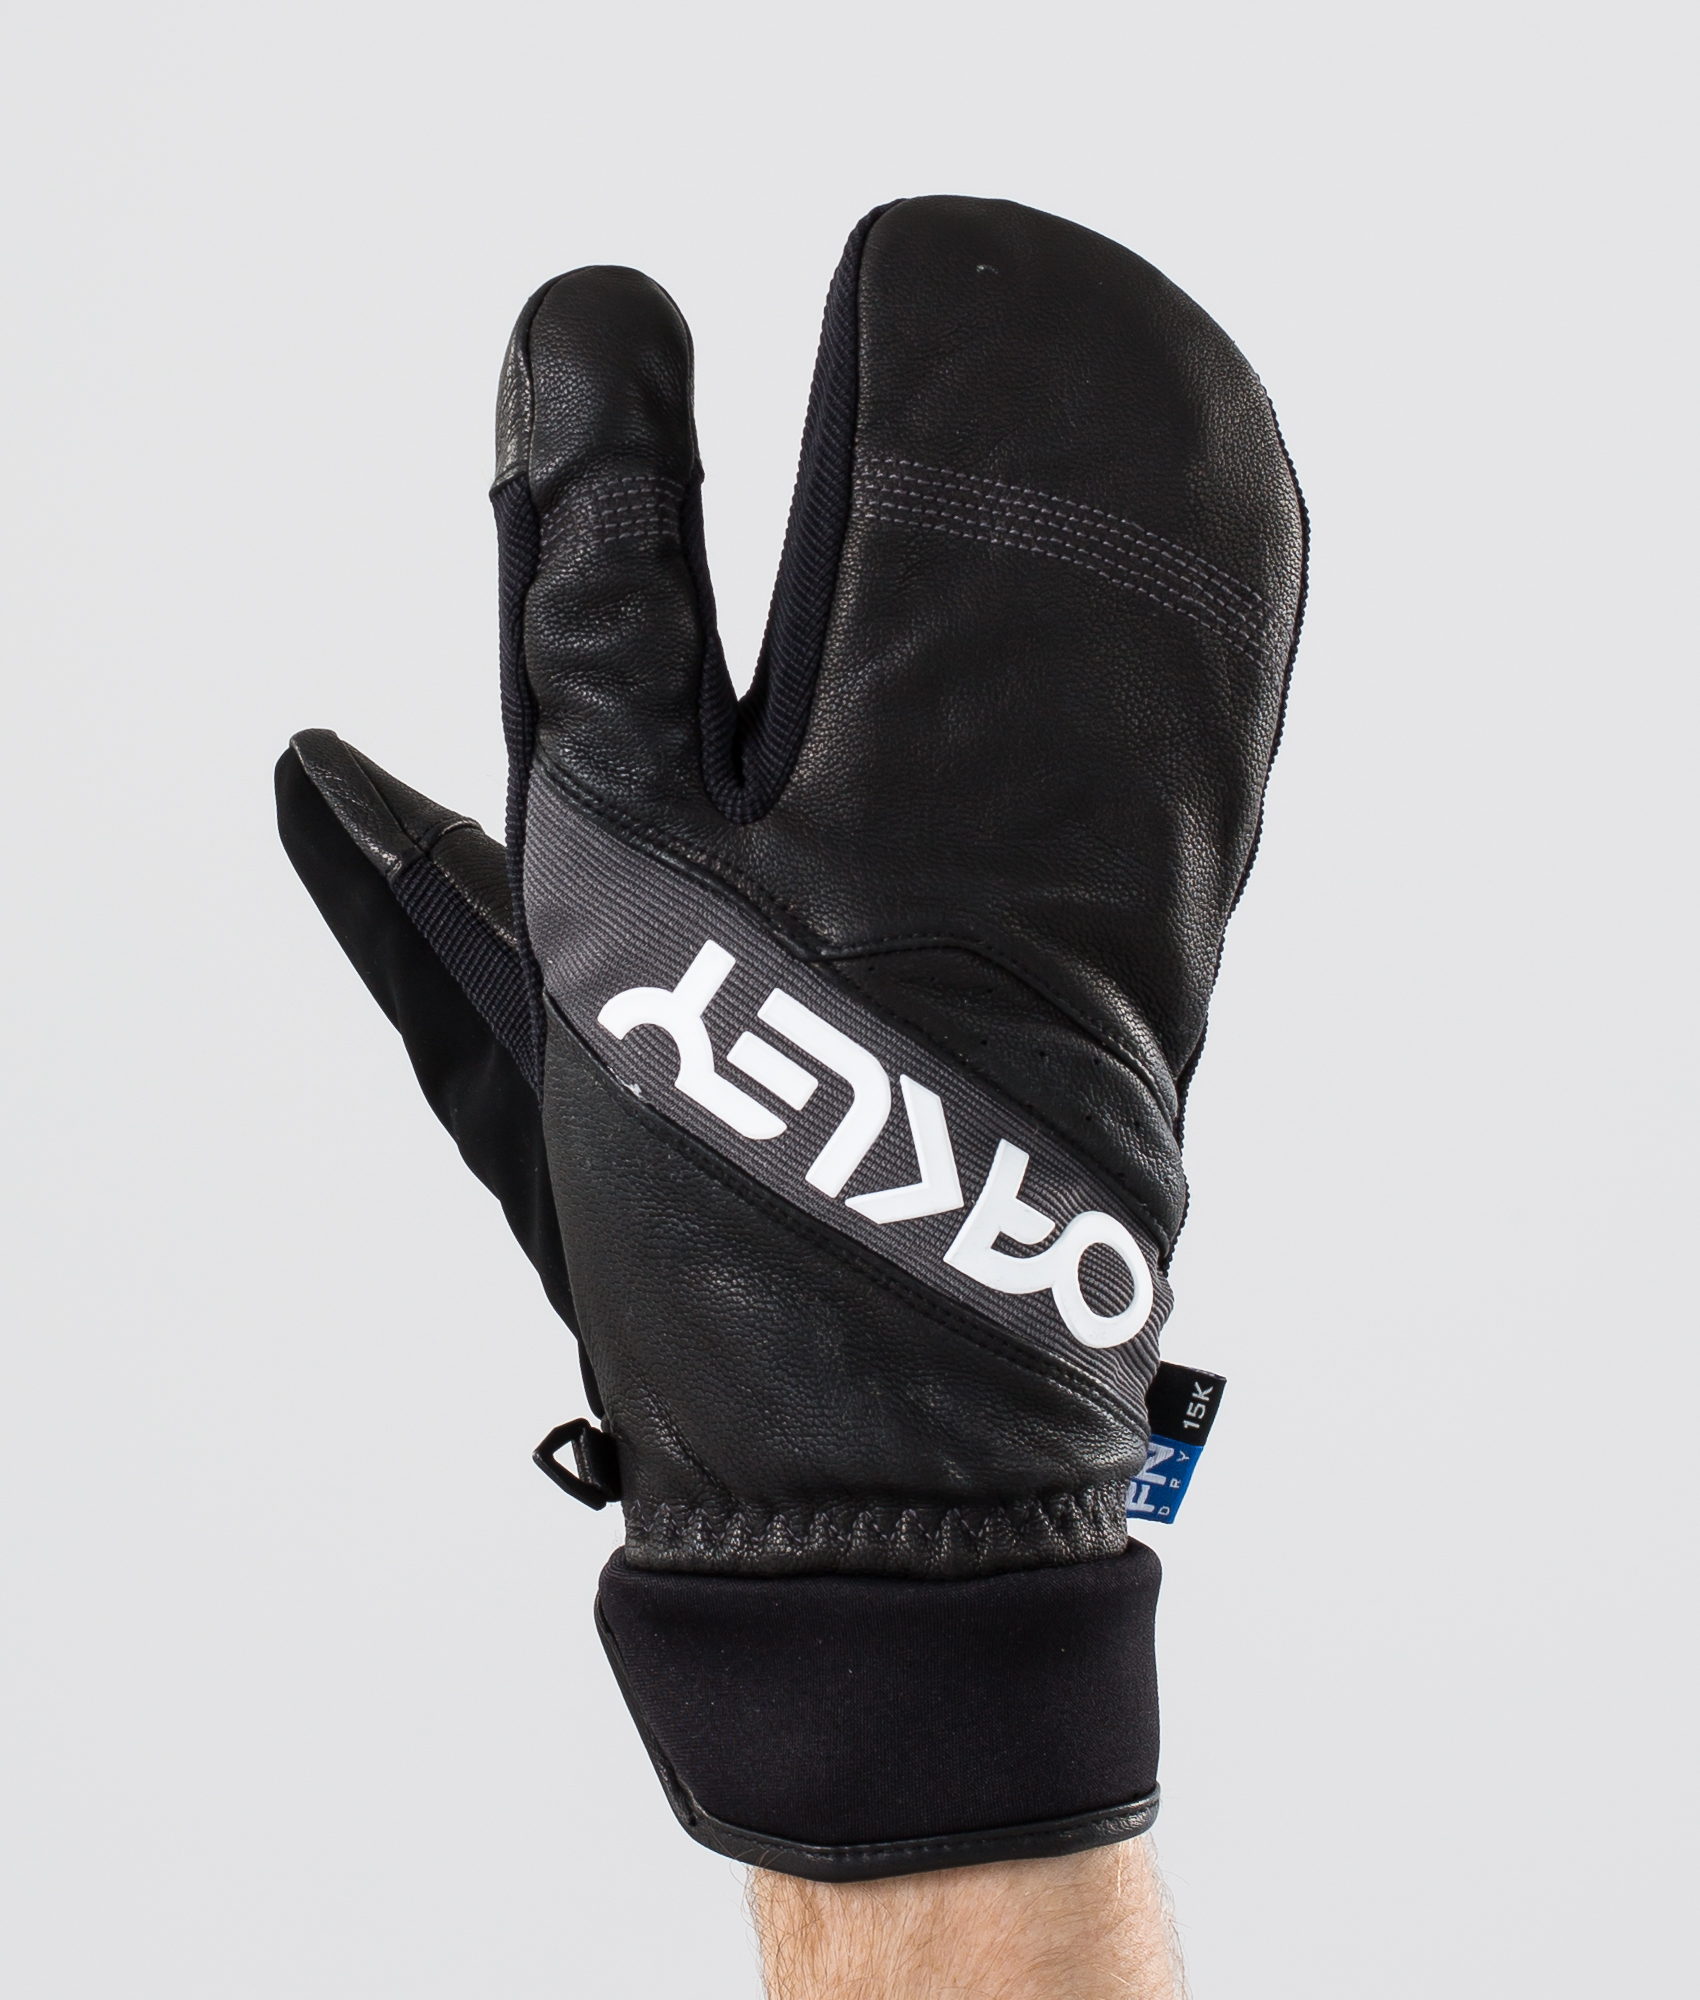 oakley ski gloves